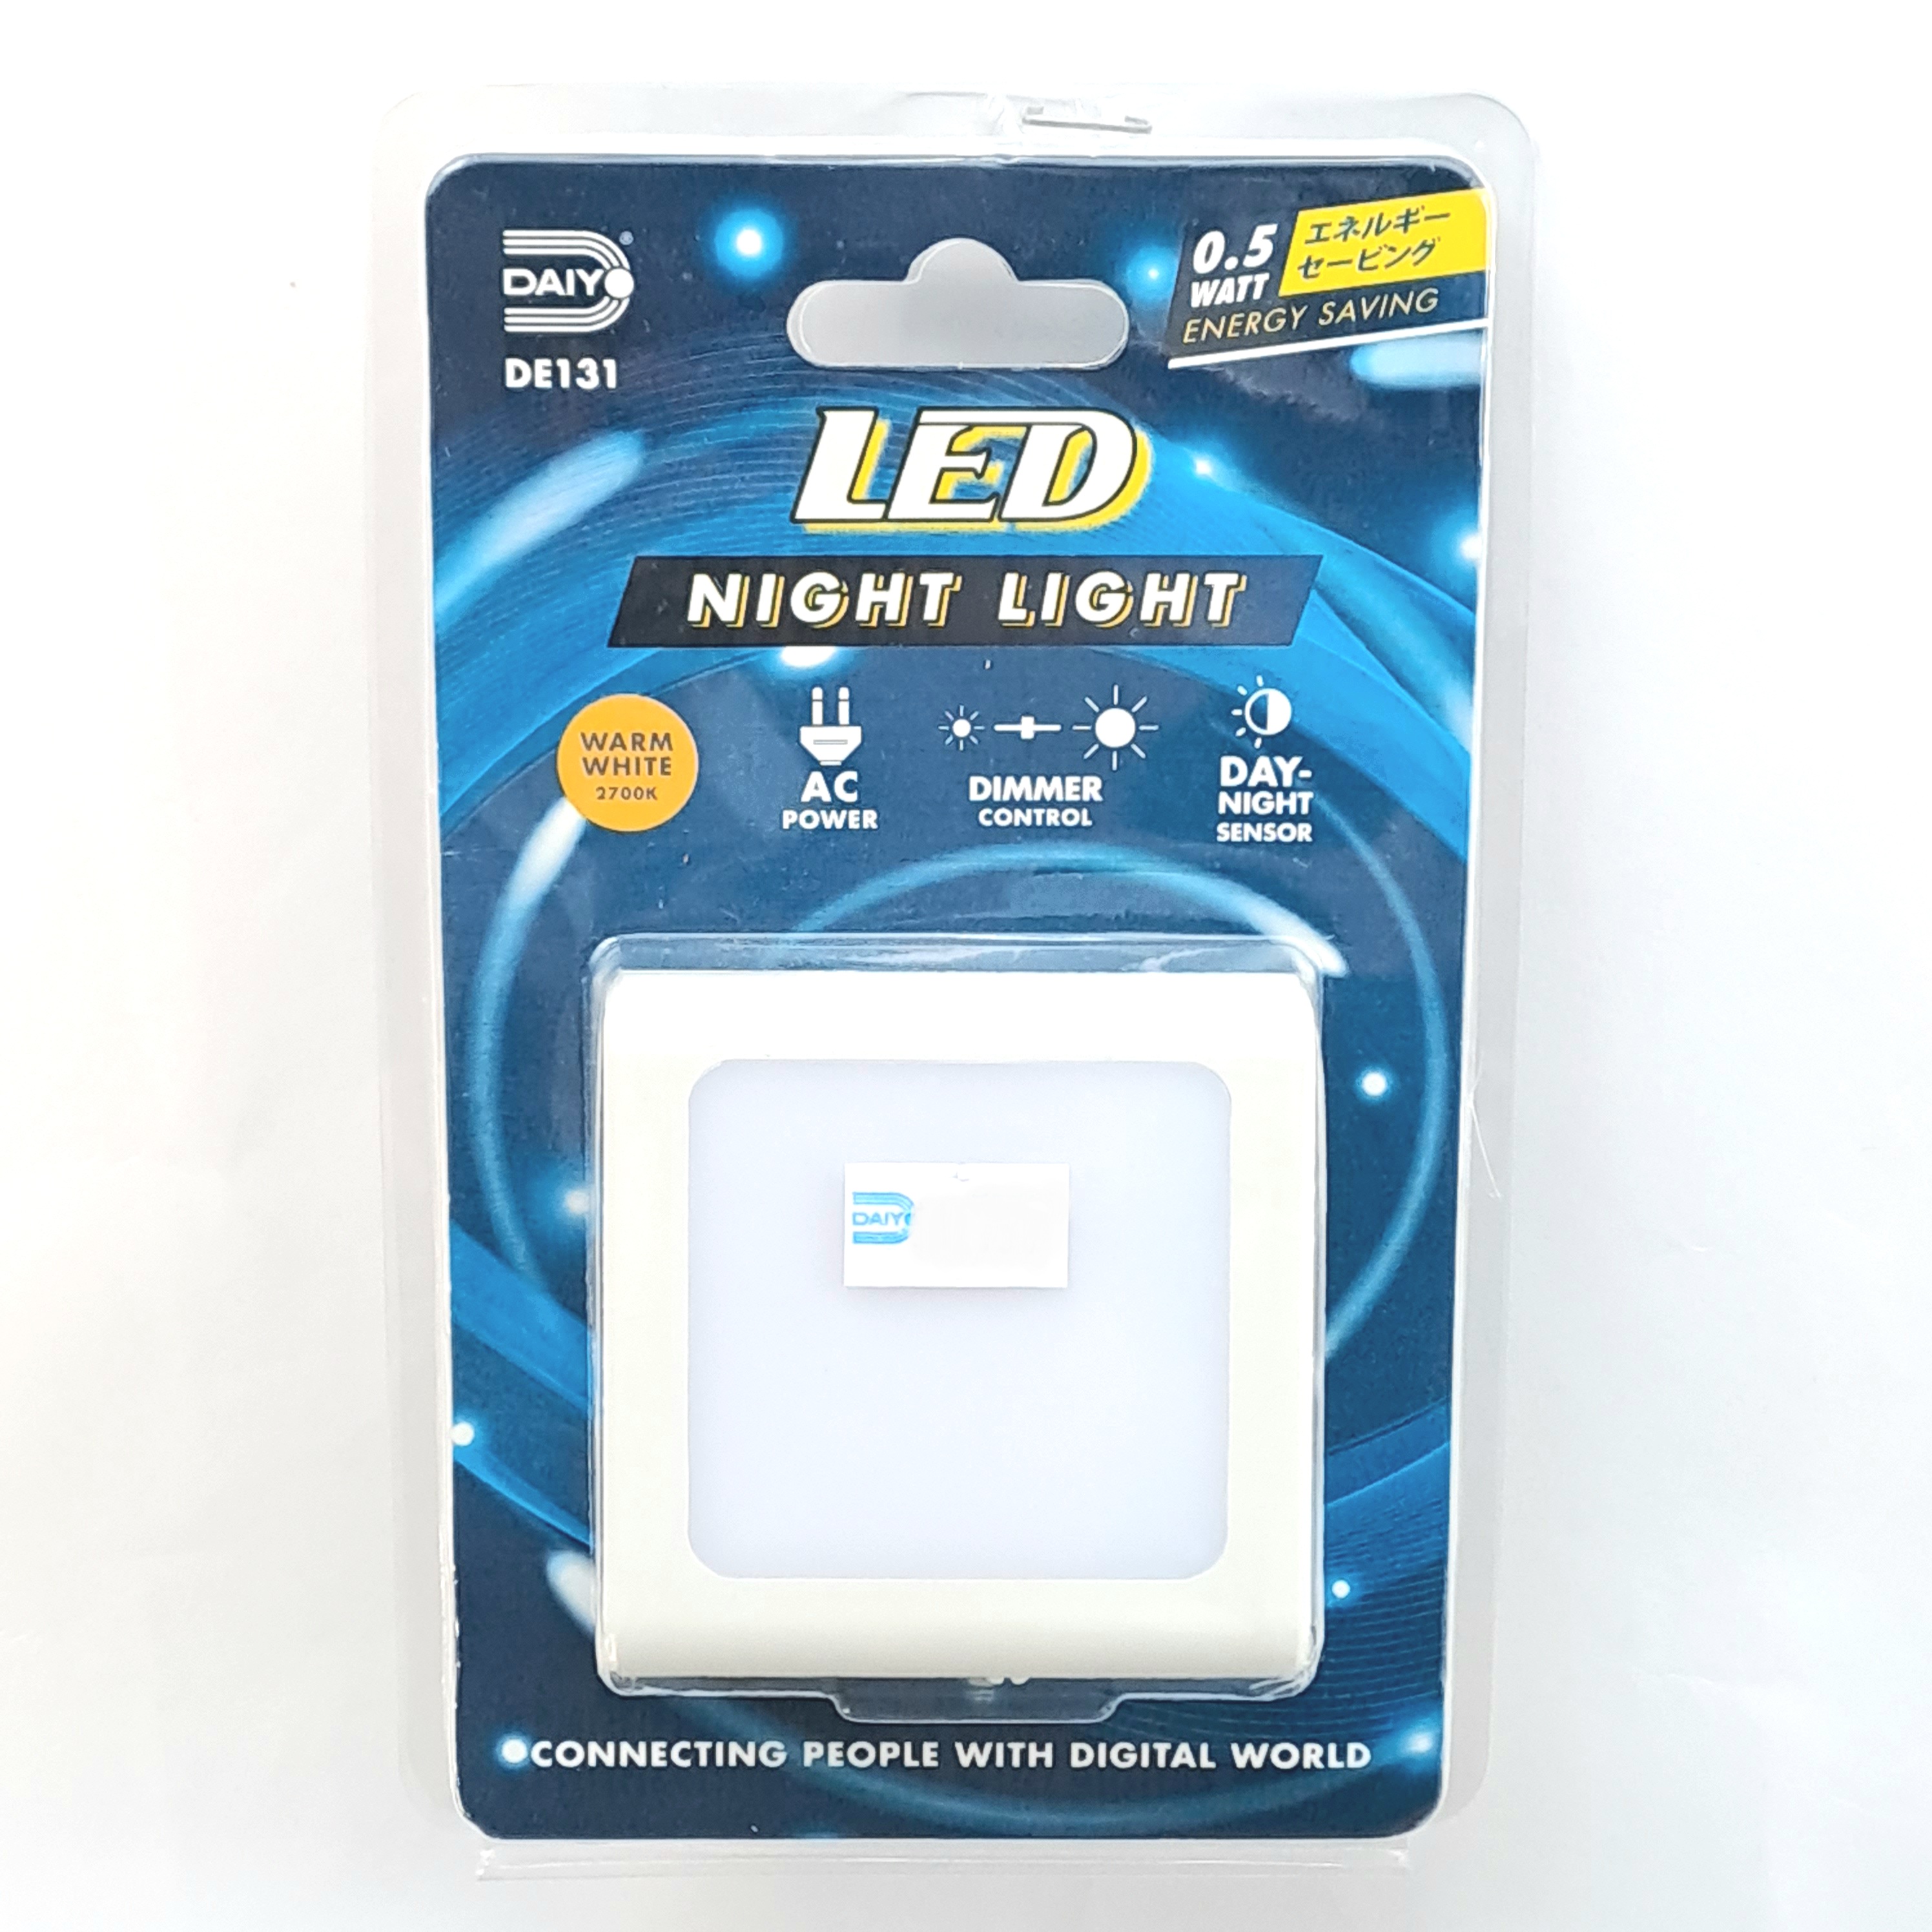 Daiyo LED Night Light w Dimmer Control & Day/Night Sensor